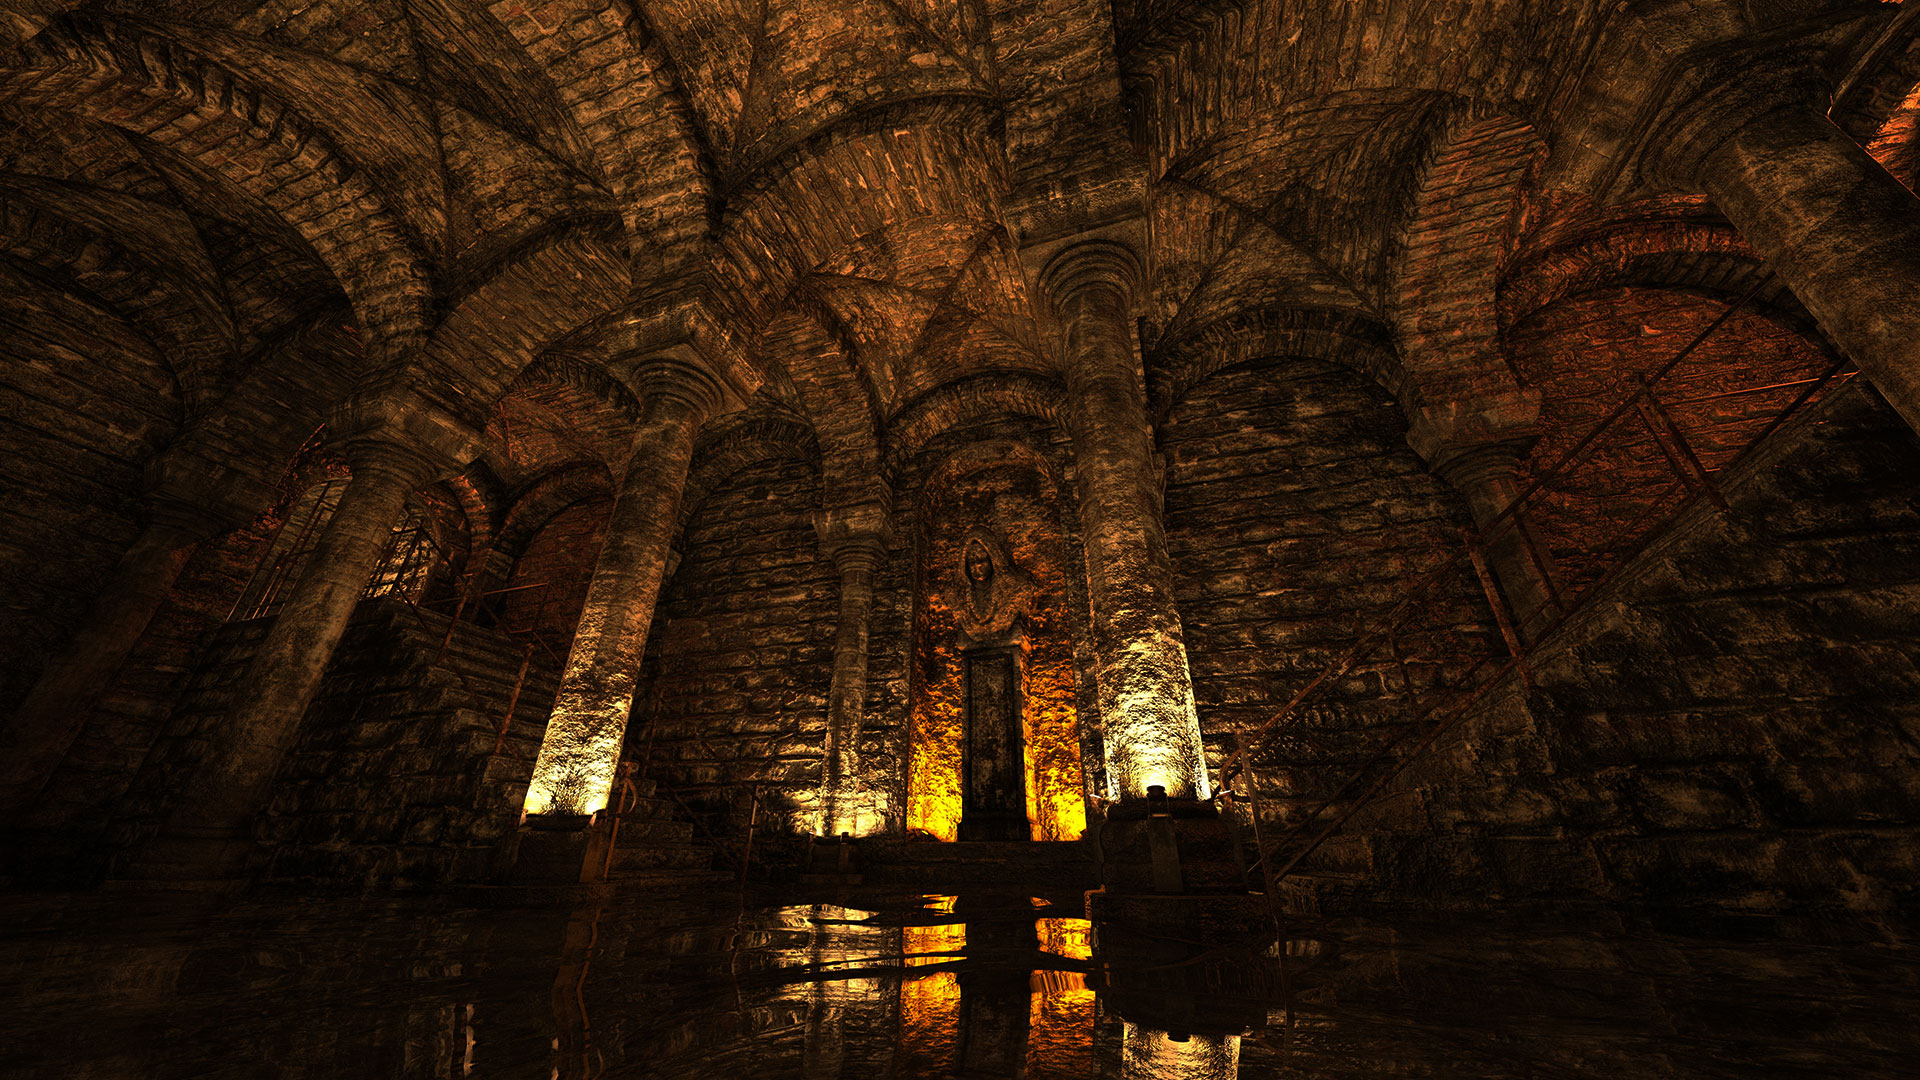 Dragonic Game Gameplay Screenshot Dungeon Gothic